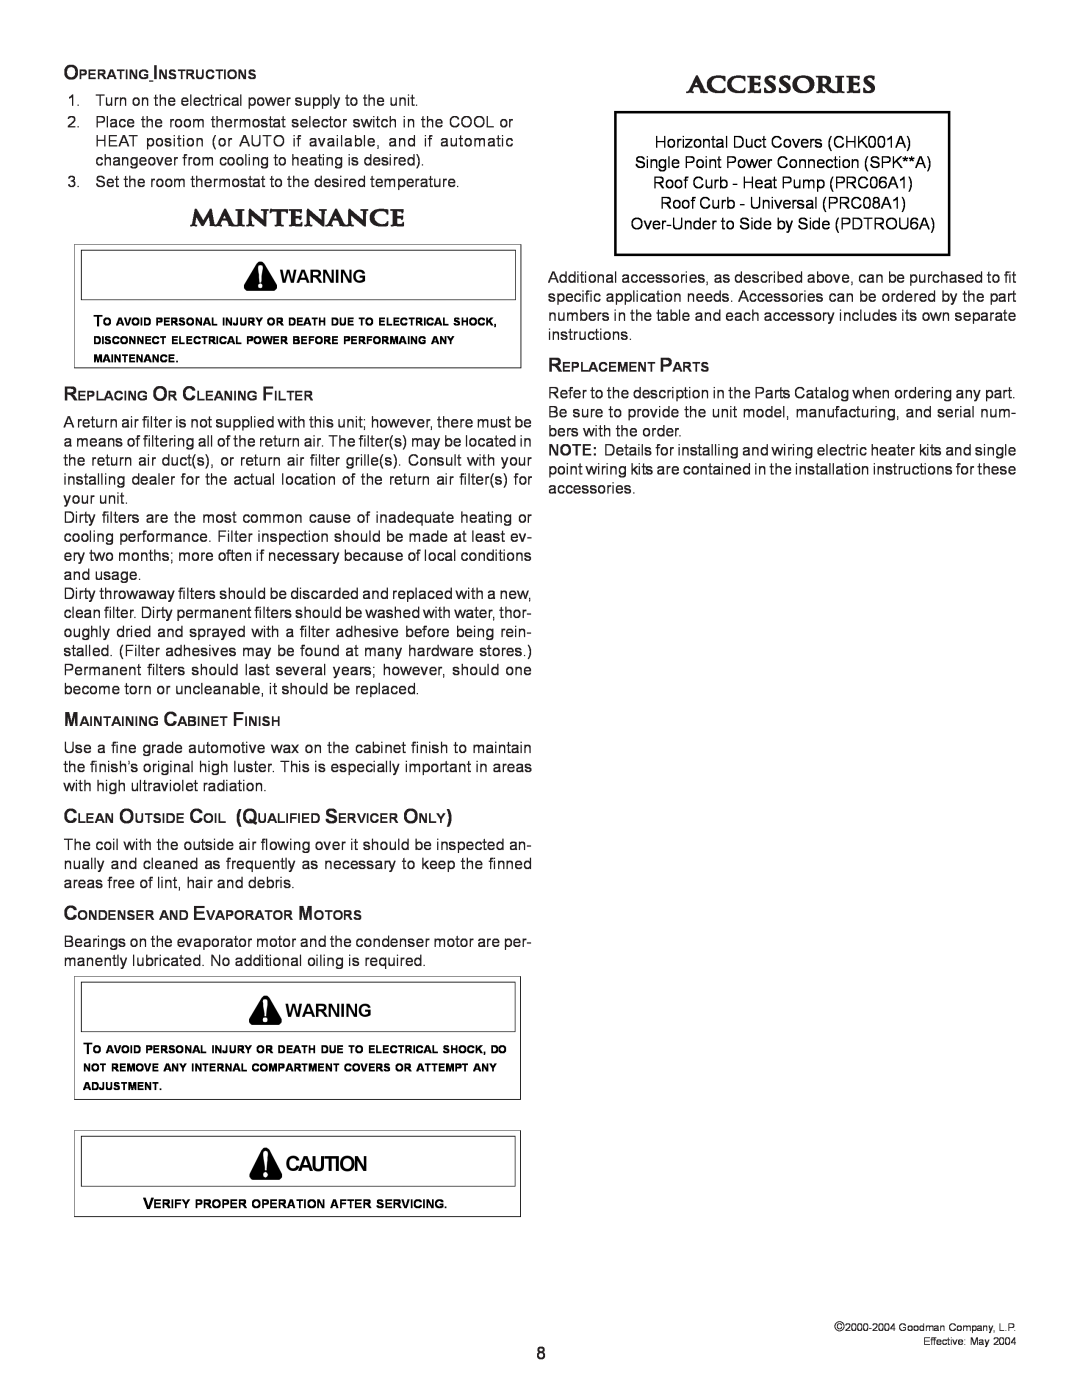 Amana 10730418 installation instructions Maintenance, Accessories 